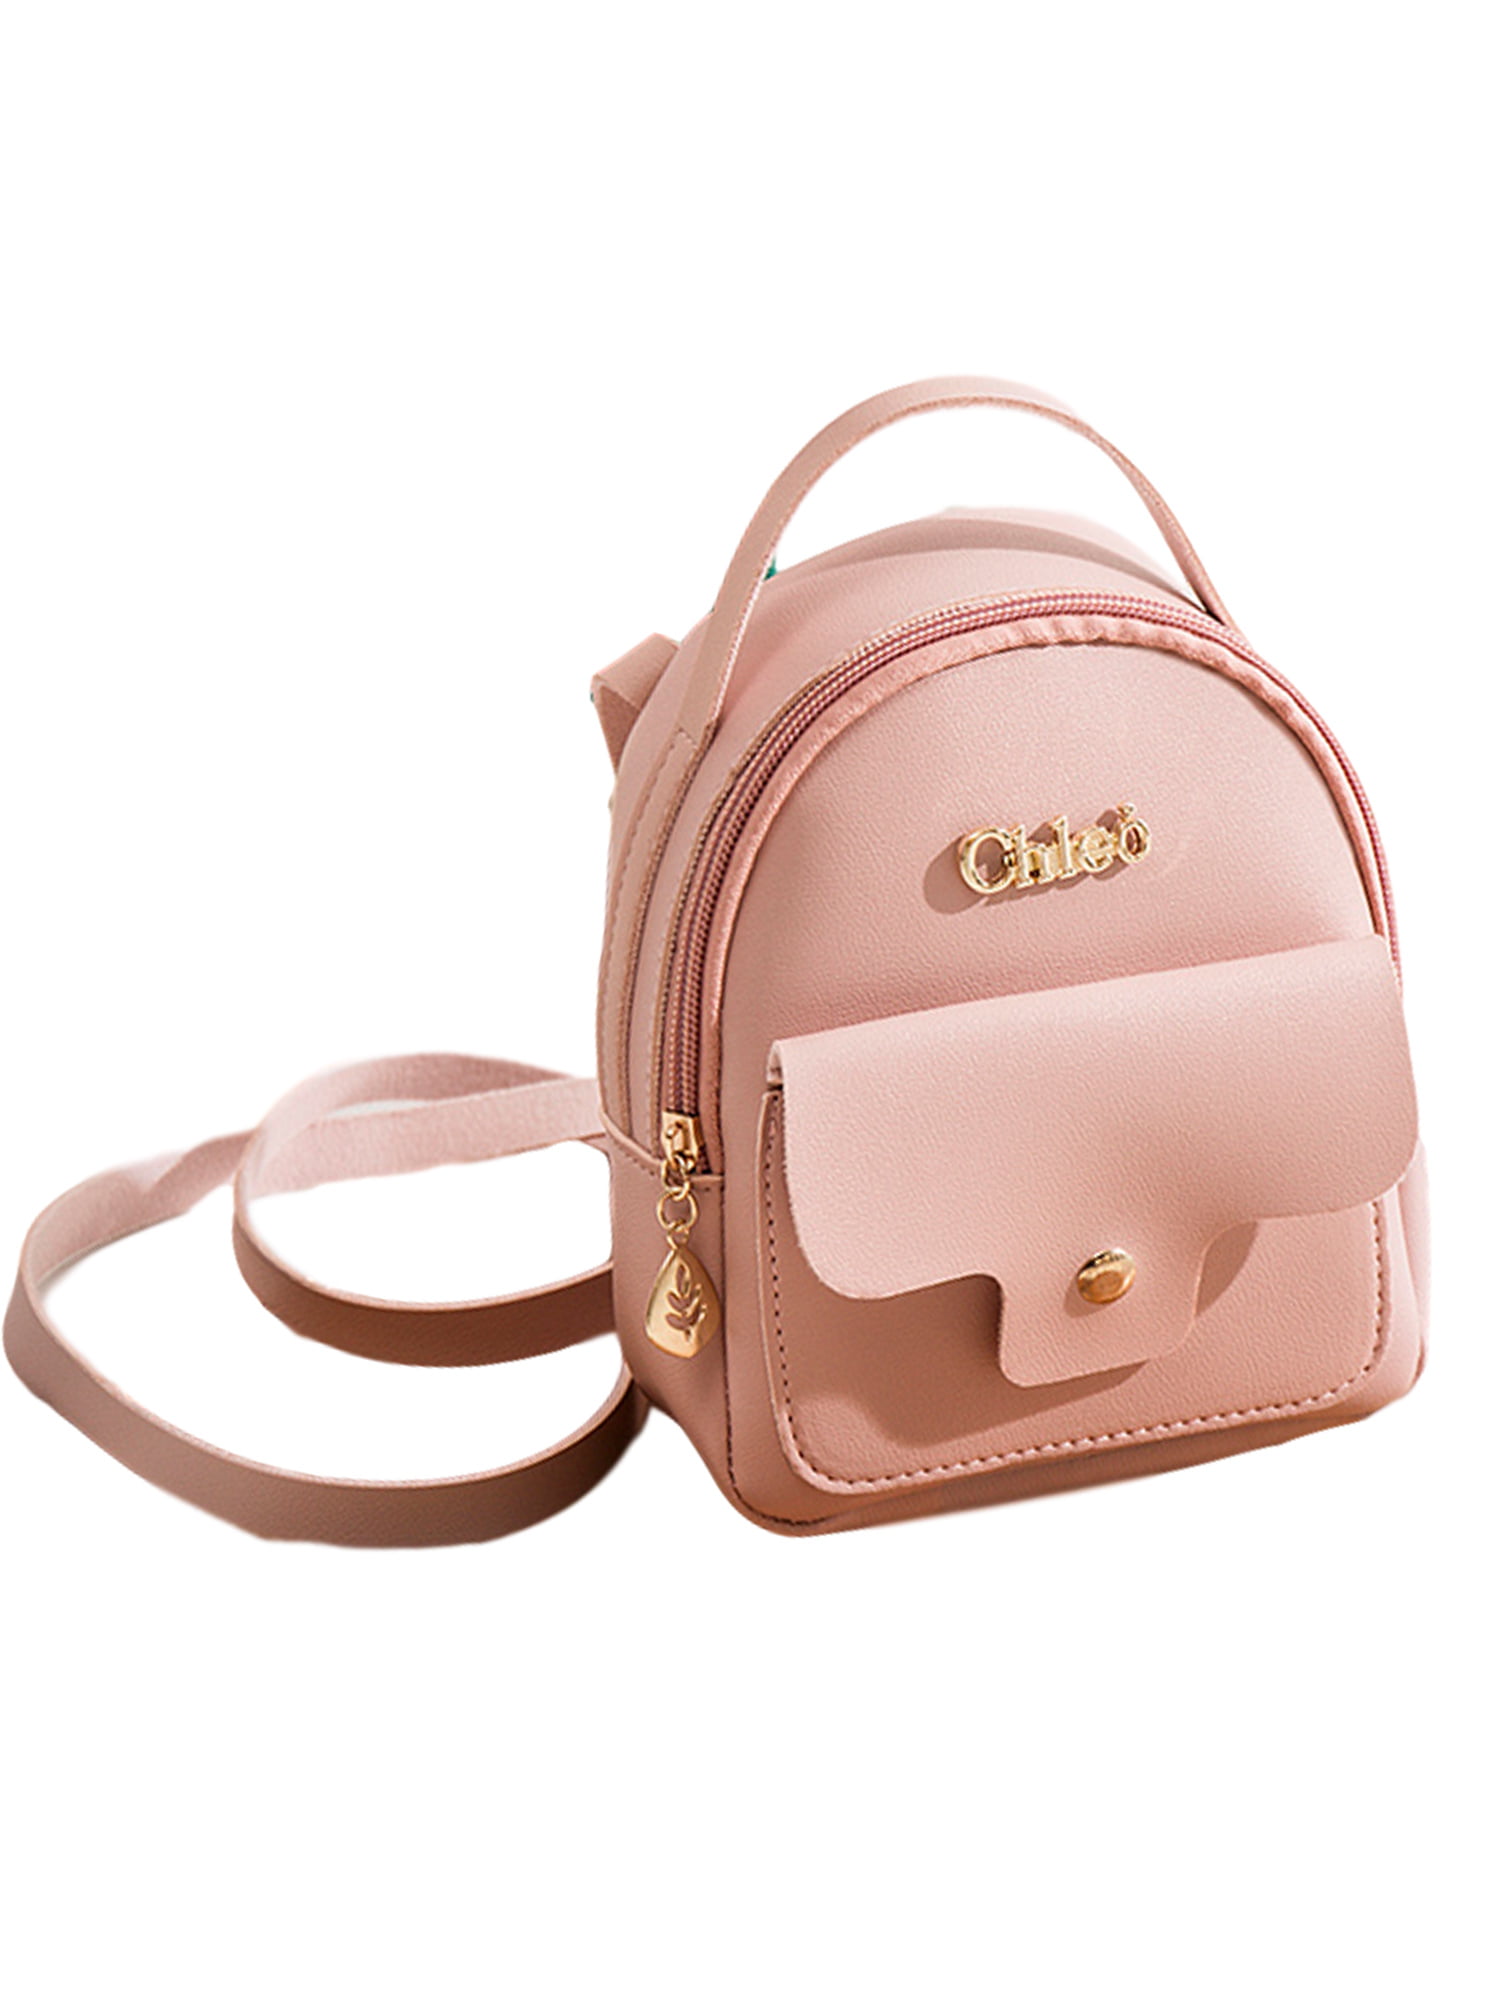 Girls PU Leather Small Mini Cute Backpack School Travel Shoulder Bag 